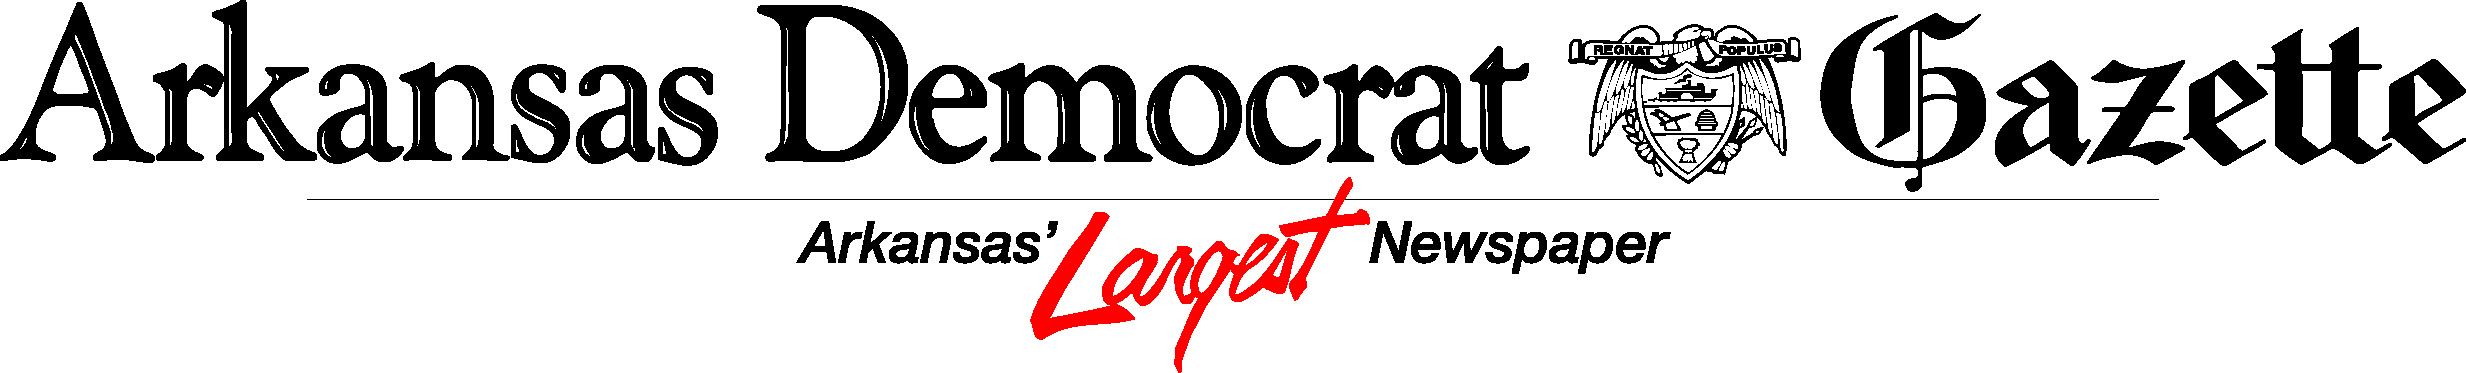 Arkansas Democrat-Gazette logo